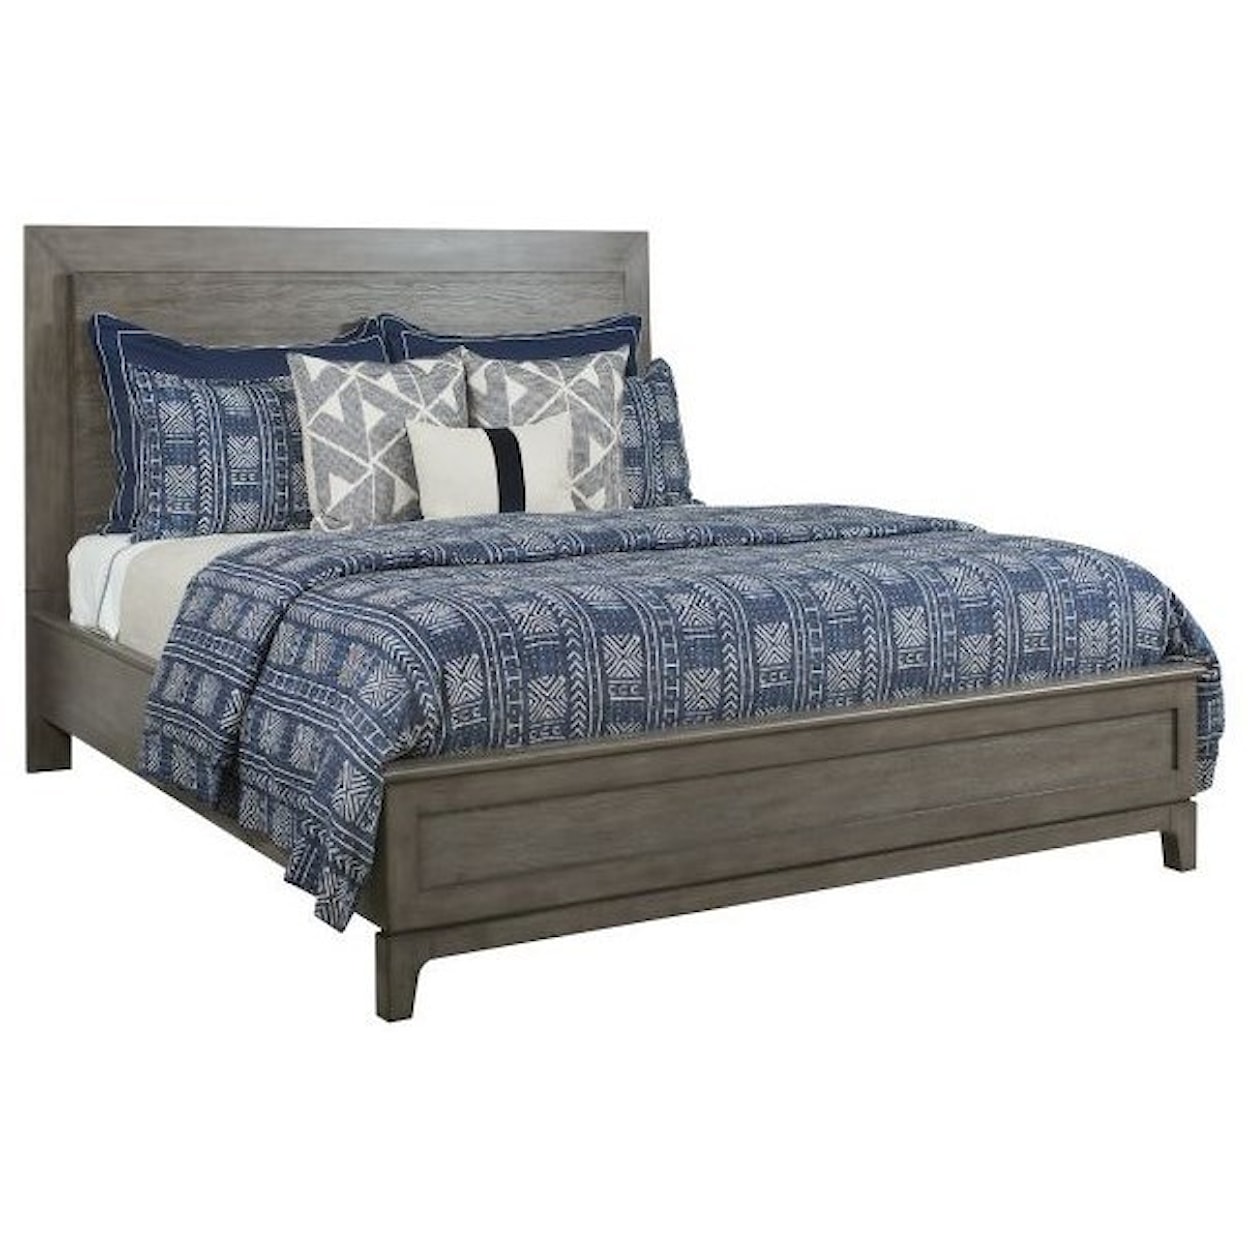 Kincaid Furniture Cascade Kline Queen Panel Bed